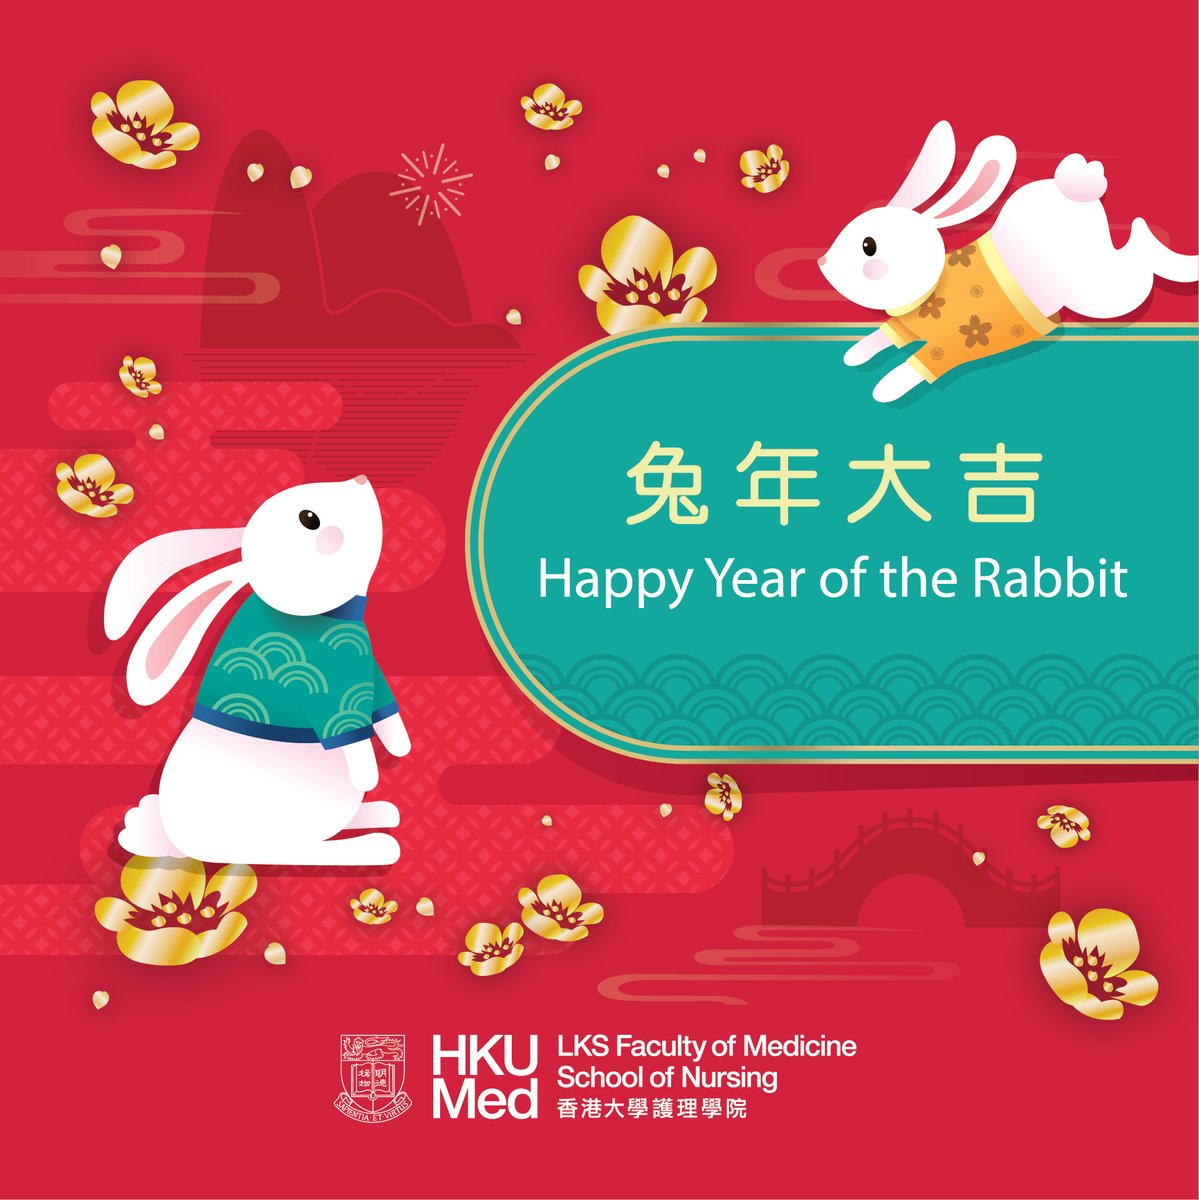 May the Year of the Rabbit bring you good health, happiness and prosperity!
#hkuson #HKUNursing
#greetings #LunarNewYear #CNY #ChineseNewYear